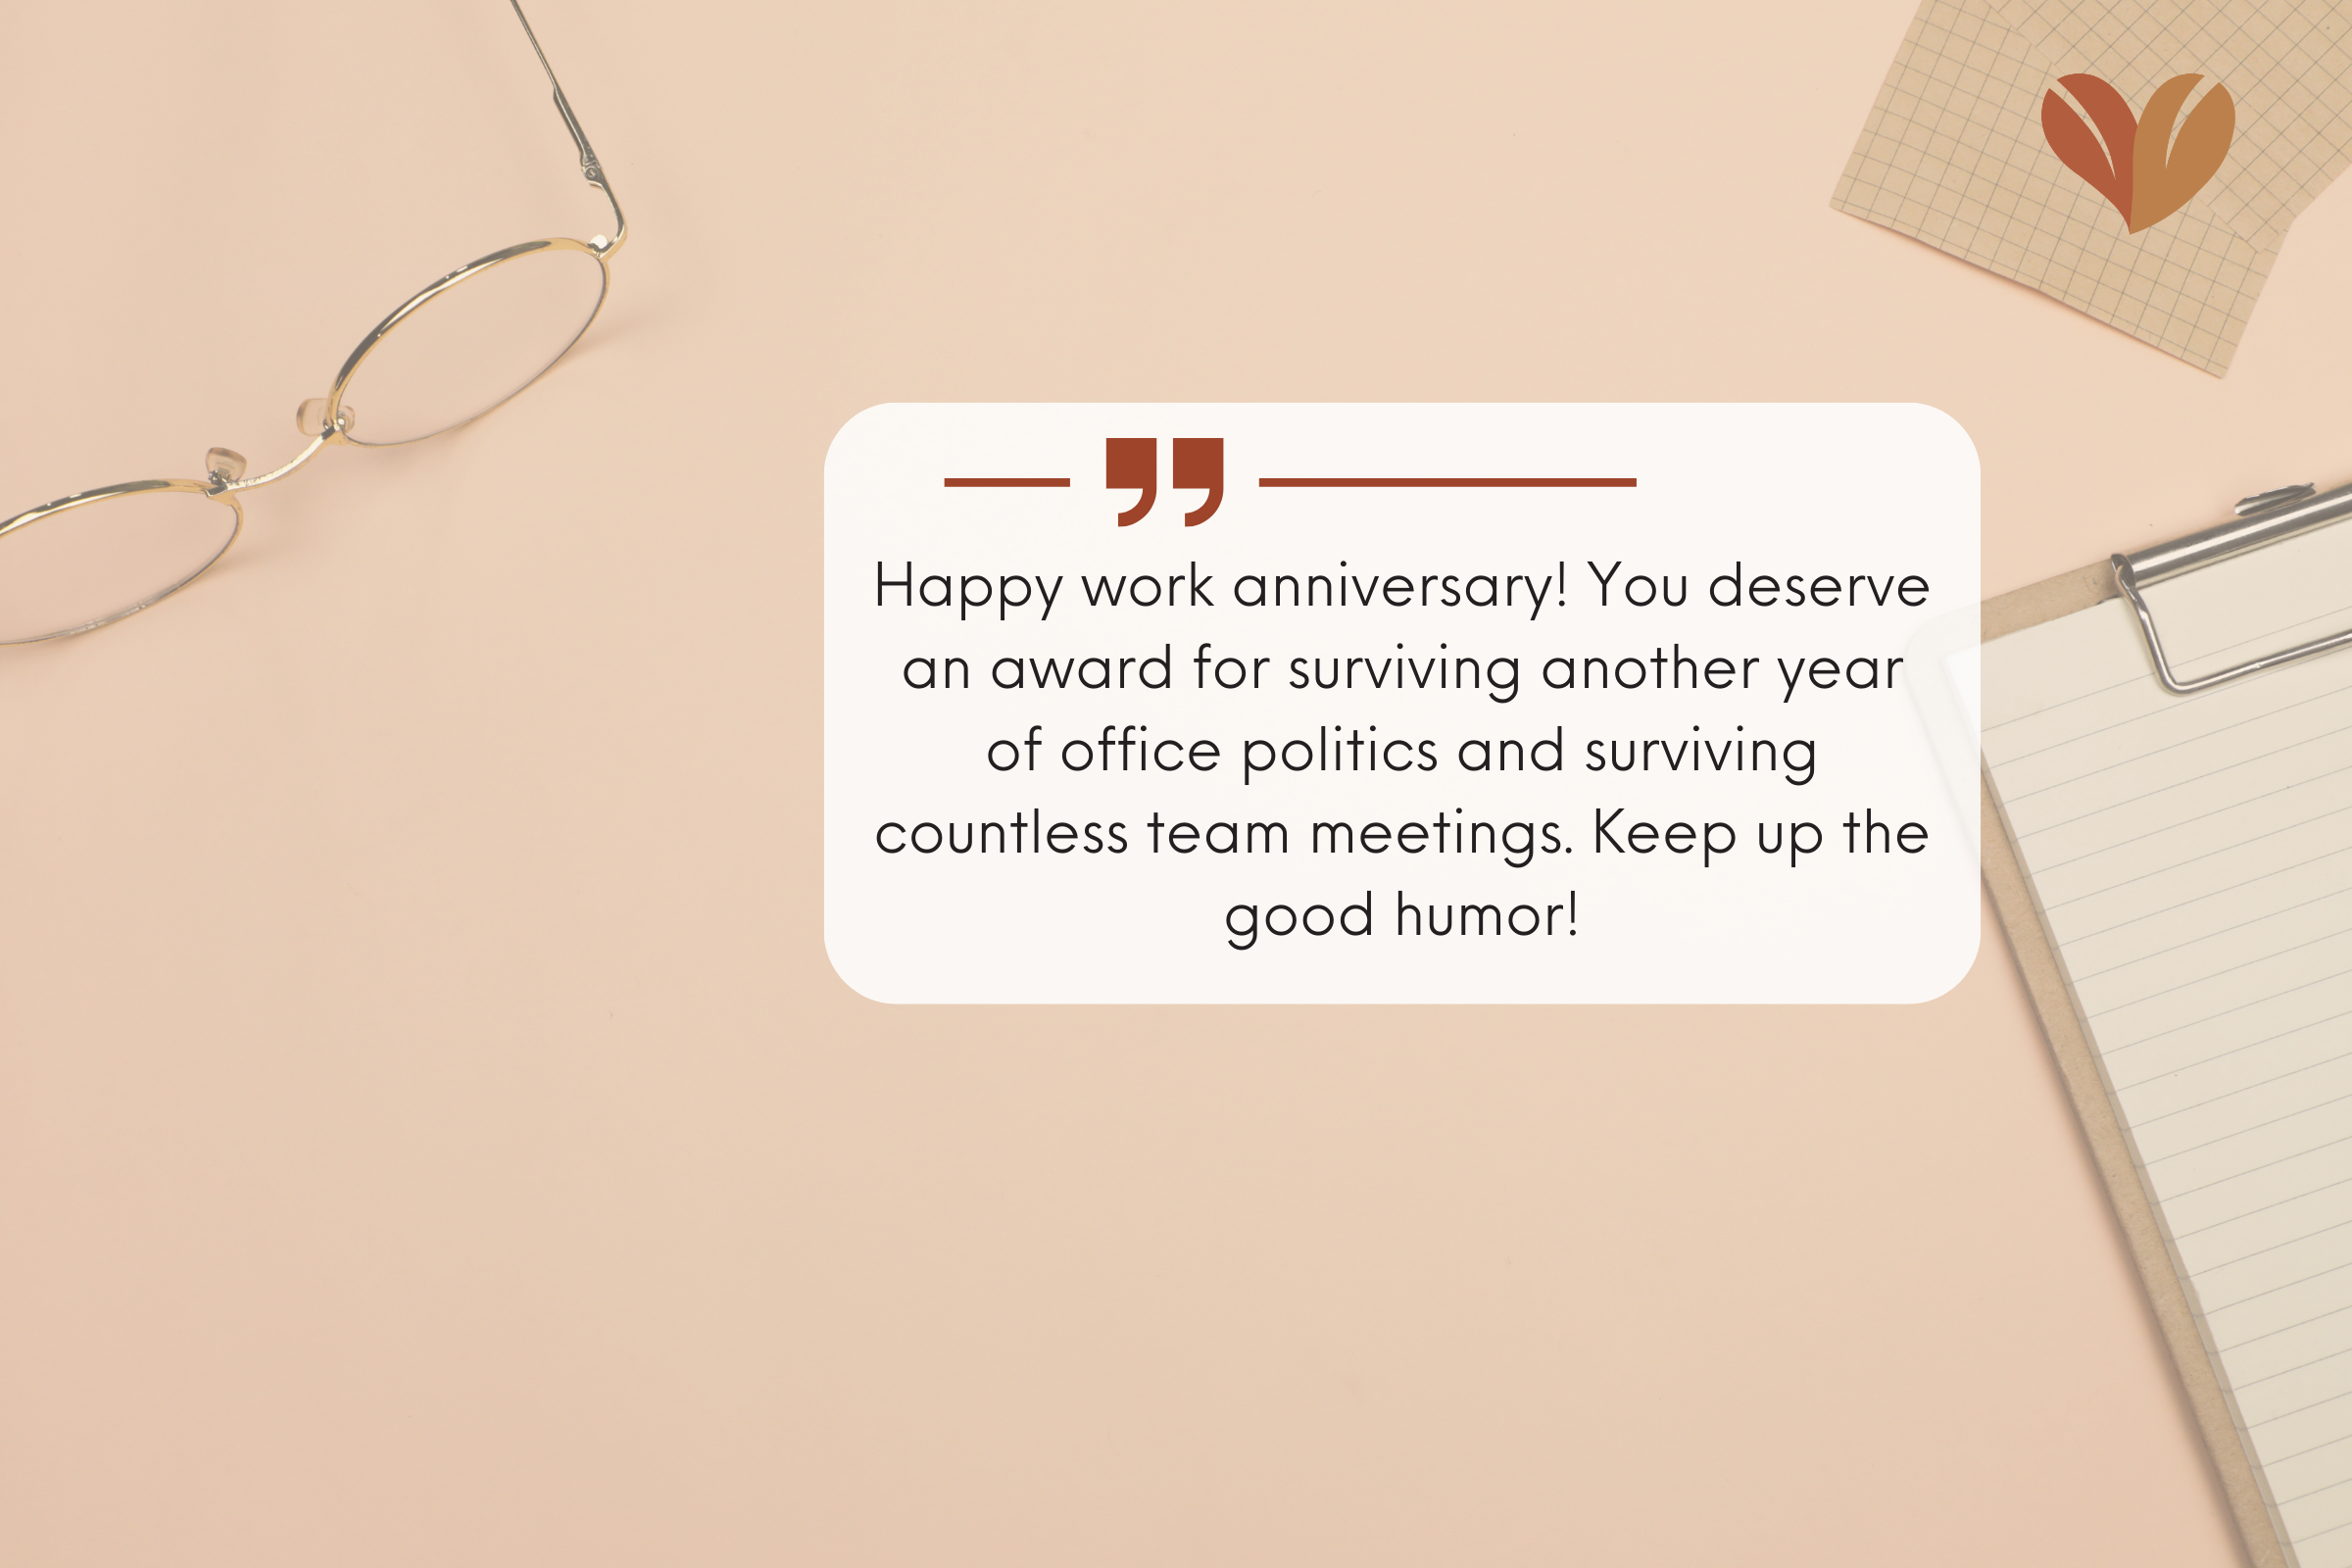 Happy work anniversary messages